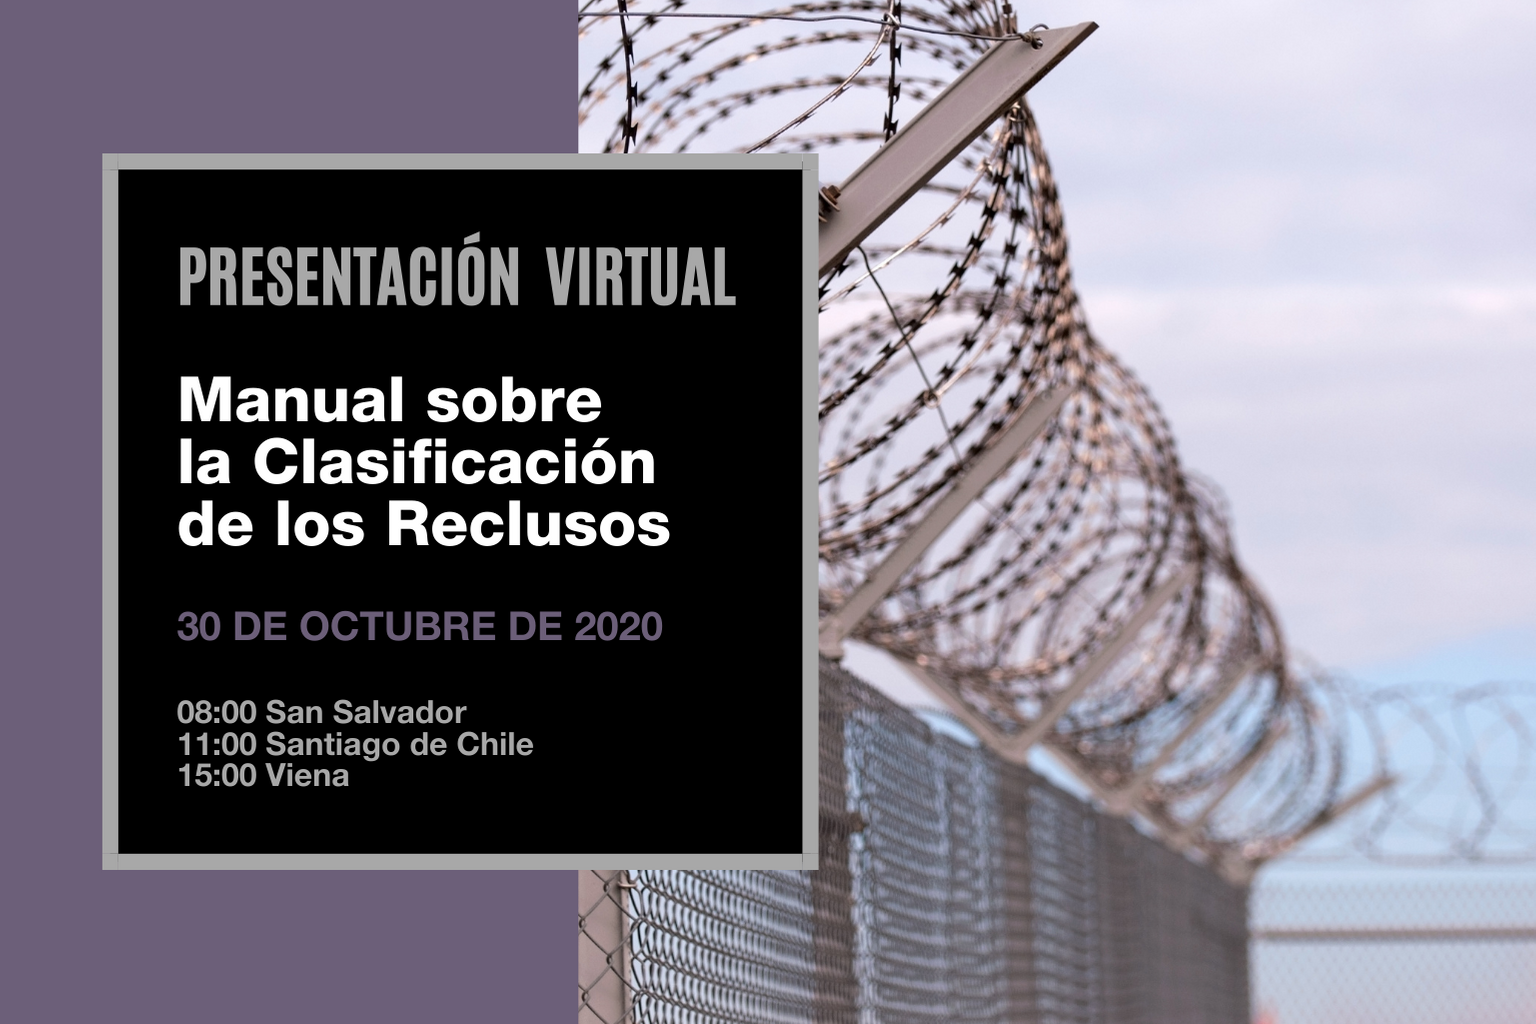 Prisoner Rehabilitation - Events - Presentacion Virtual Manual sobre la Clasificacion de los Reclusos